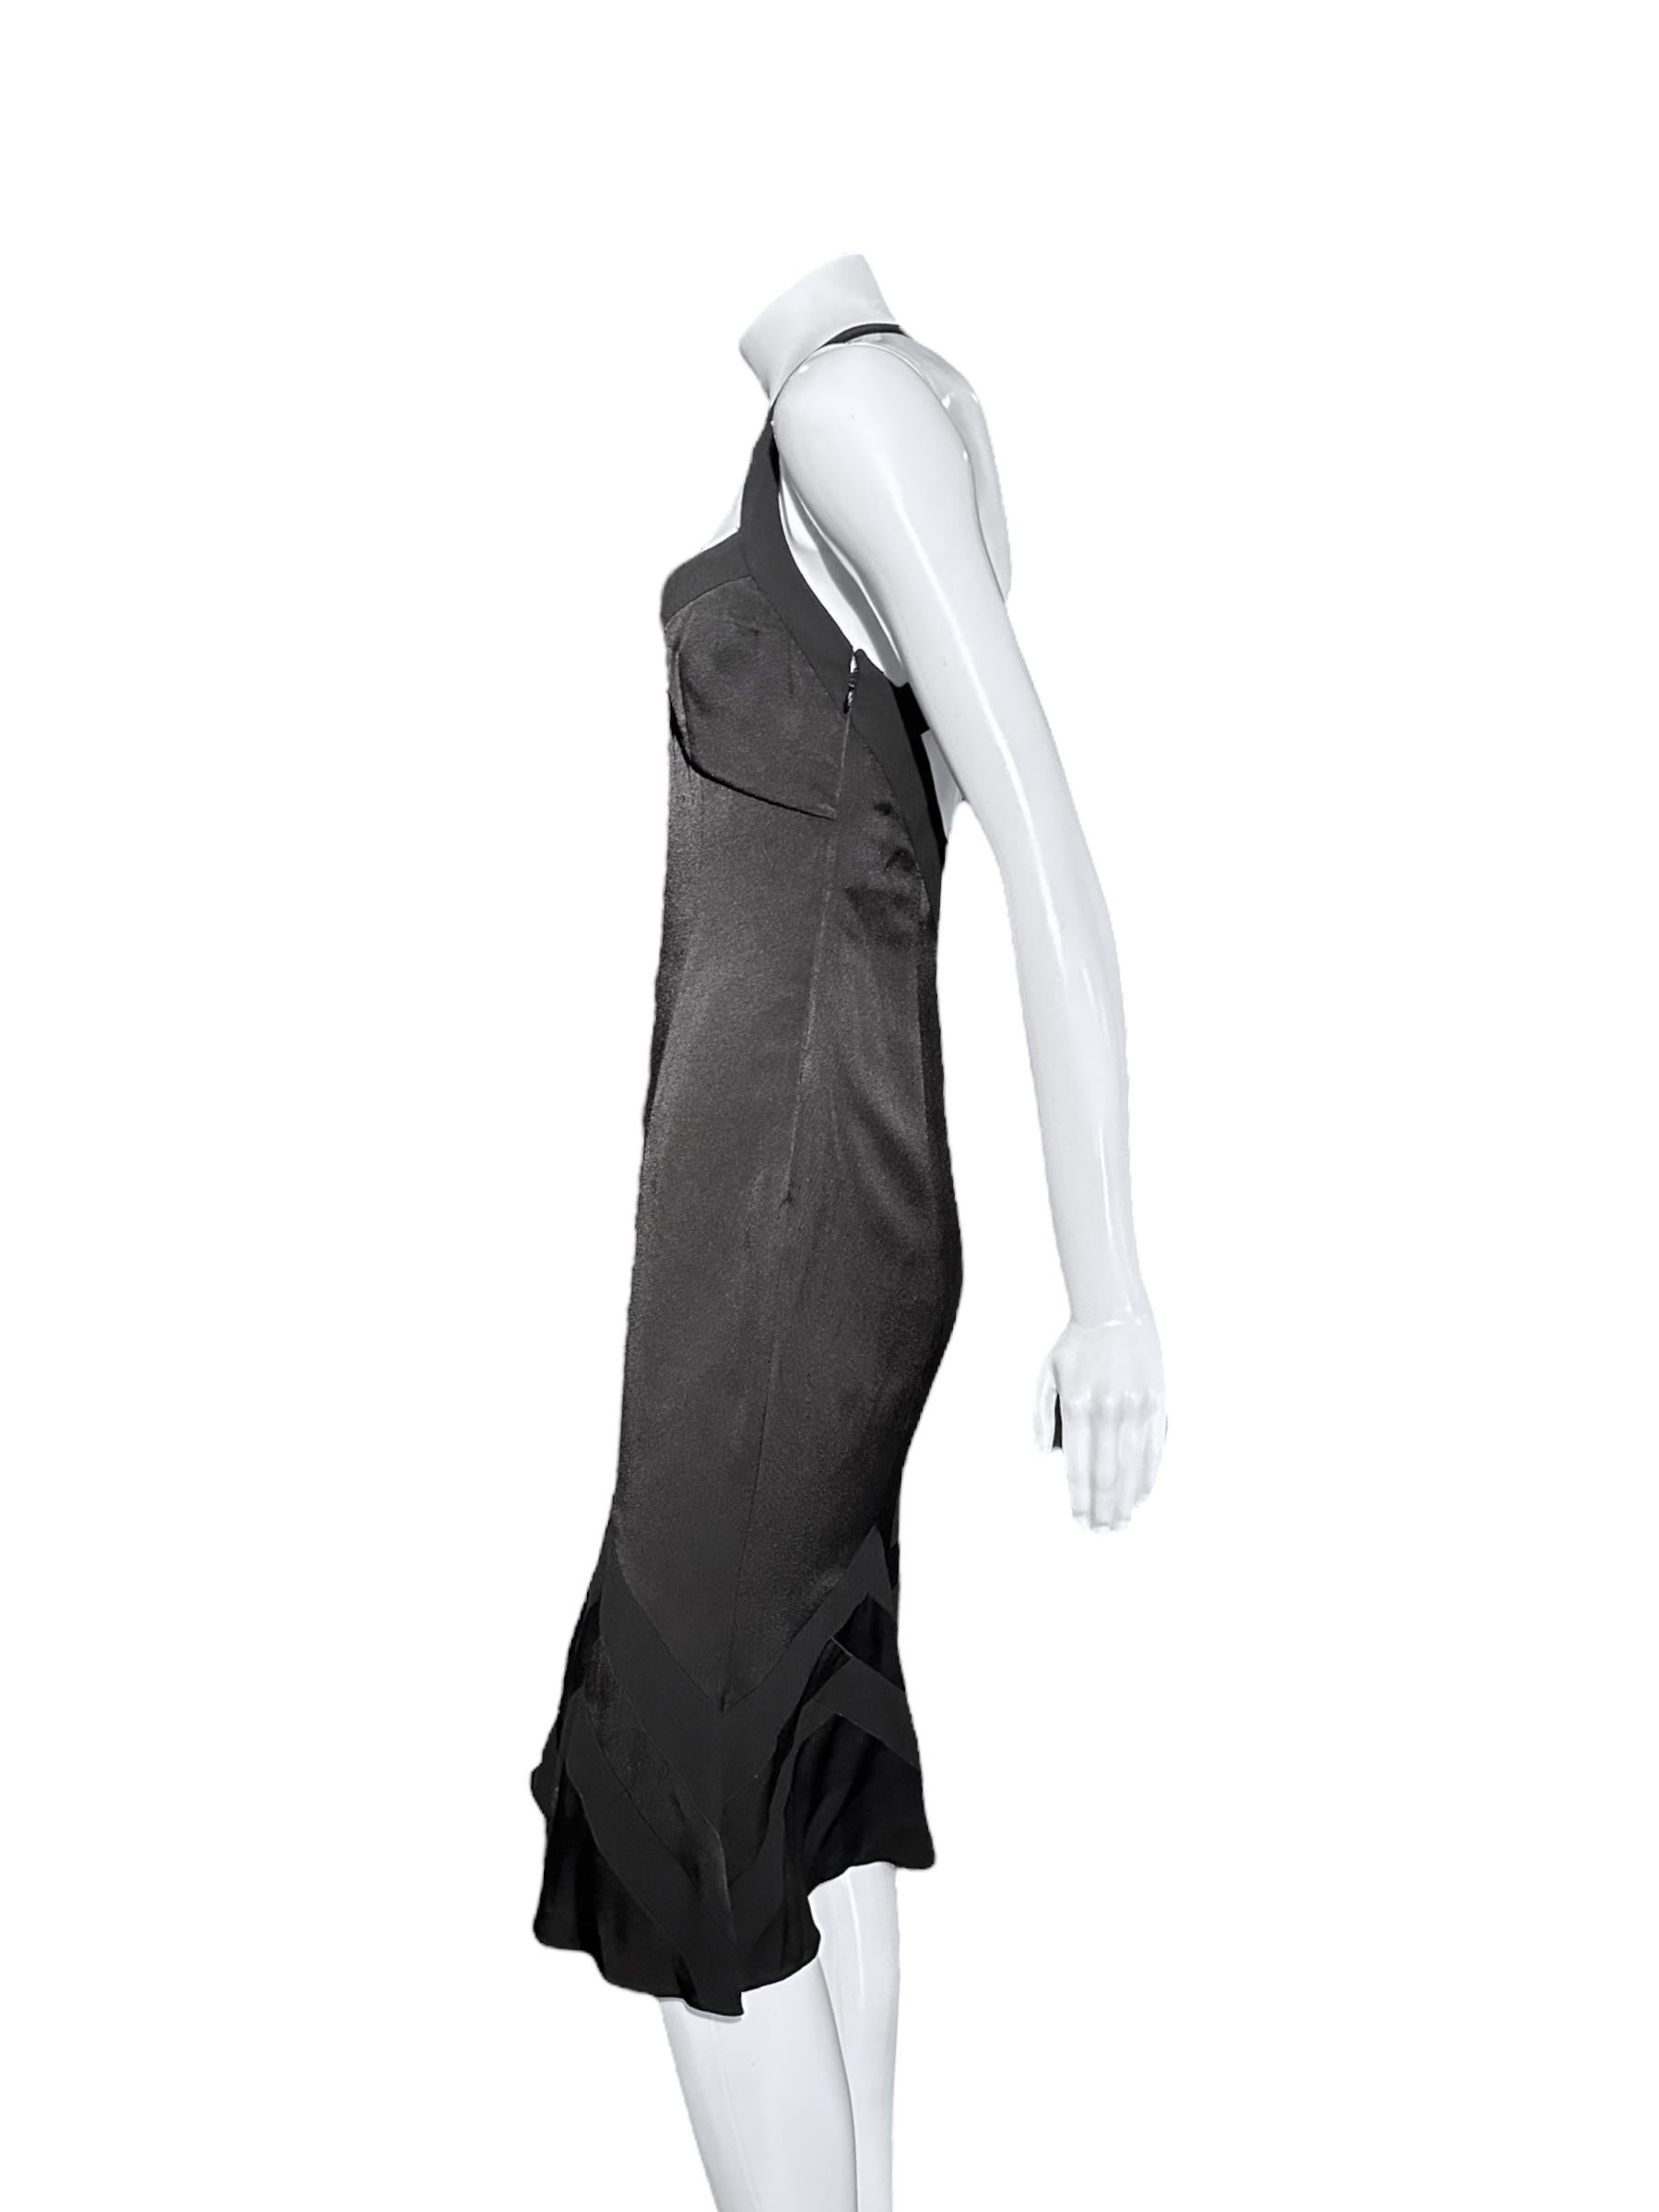 Christian Dior By John Galliano Fw 2004 Black Bias Cut Silk Slip Dress For Sale 3